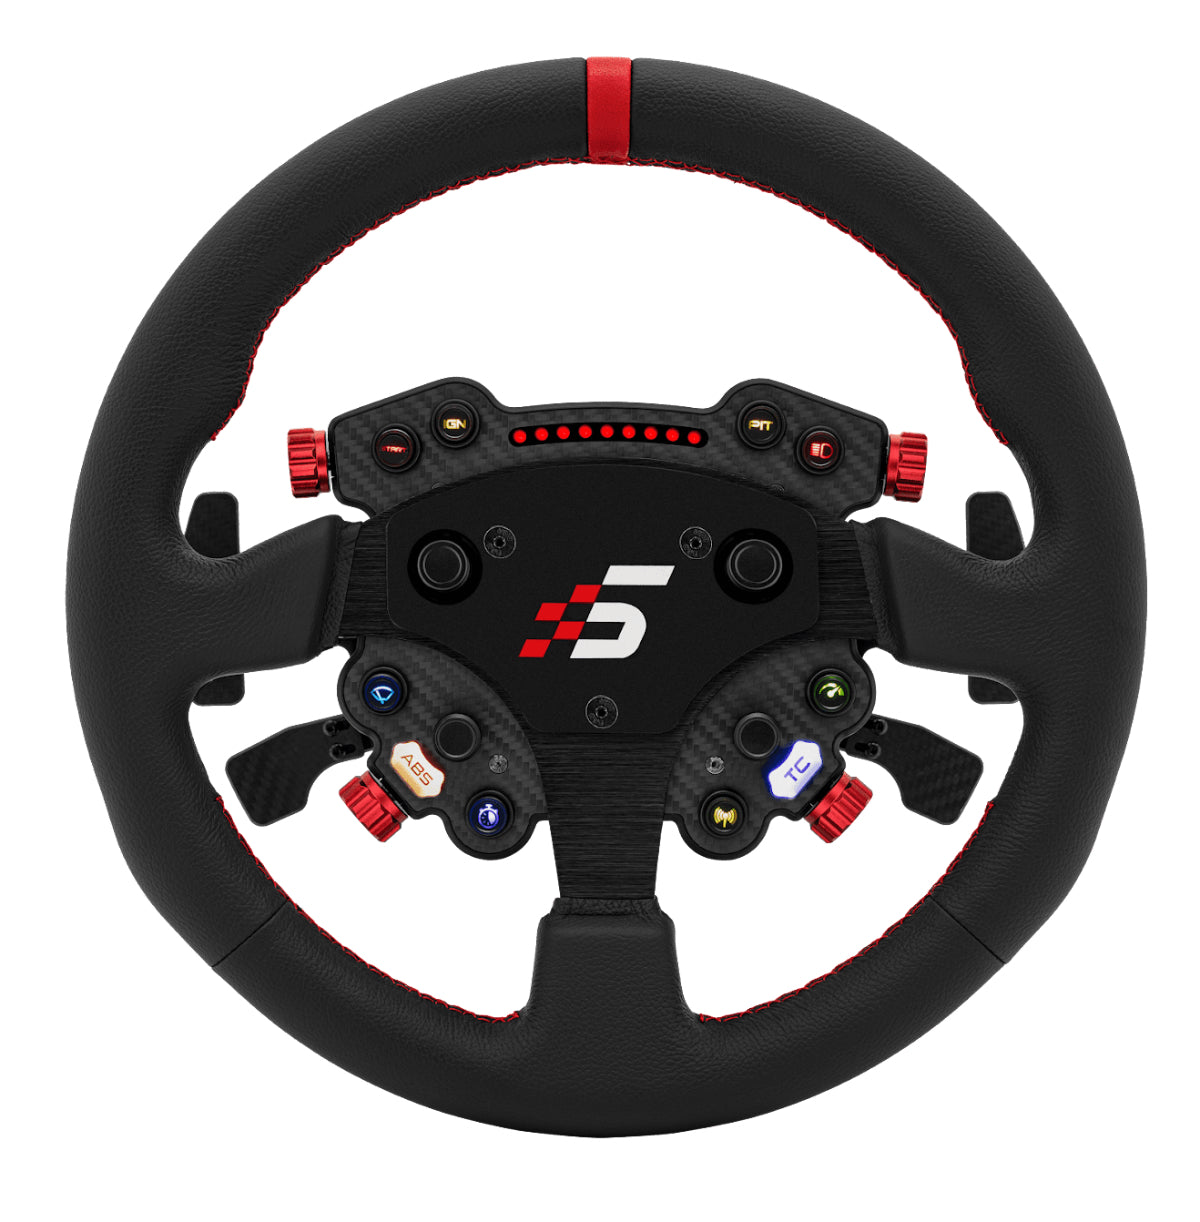 Simagic GT Pro Wheel